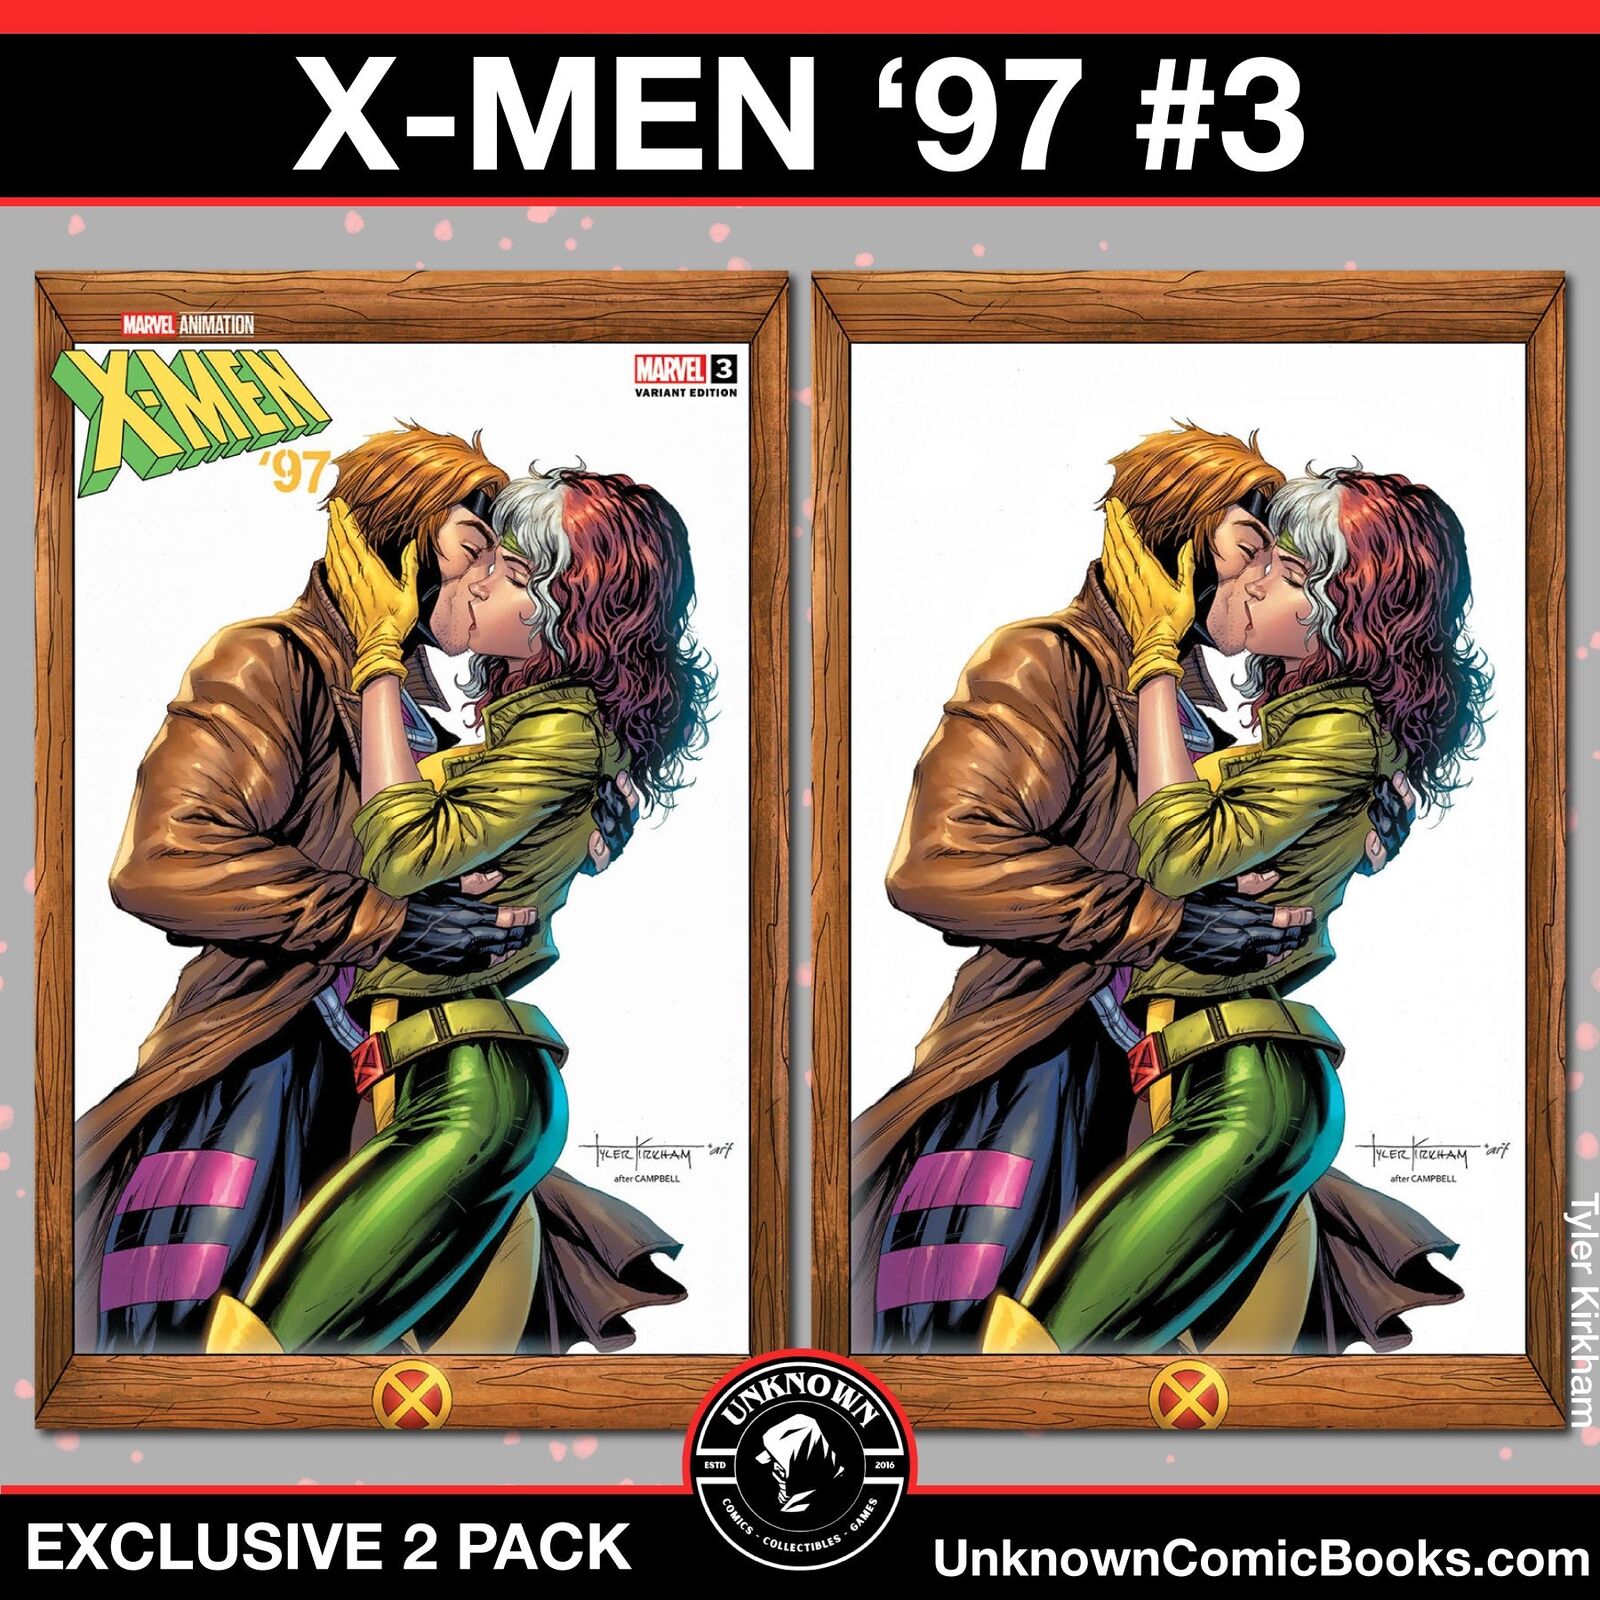 [2 PACK] X-MEN '97 #3 UNKNOWN COMICS TYLER KIRKHAM EXCLUSIVE VAR [FHX] (05/22/20